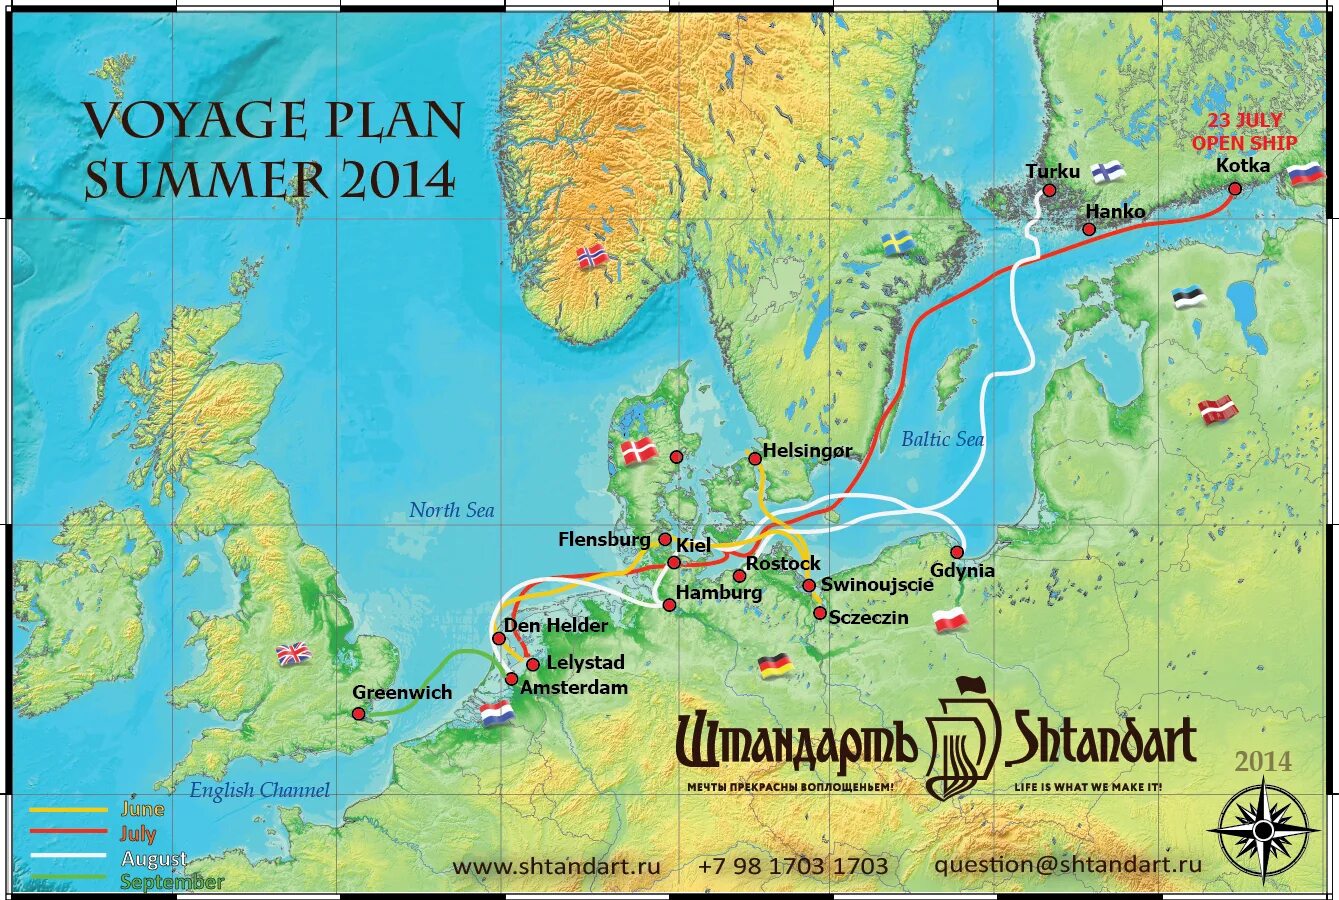 Voyage Plan. Балтийское море на карте. Как плавают корабли карта. Карта купания